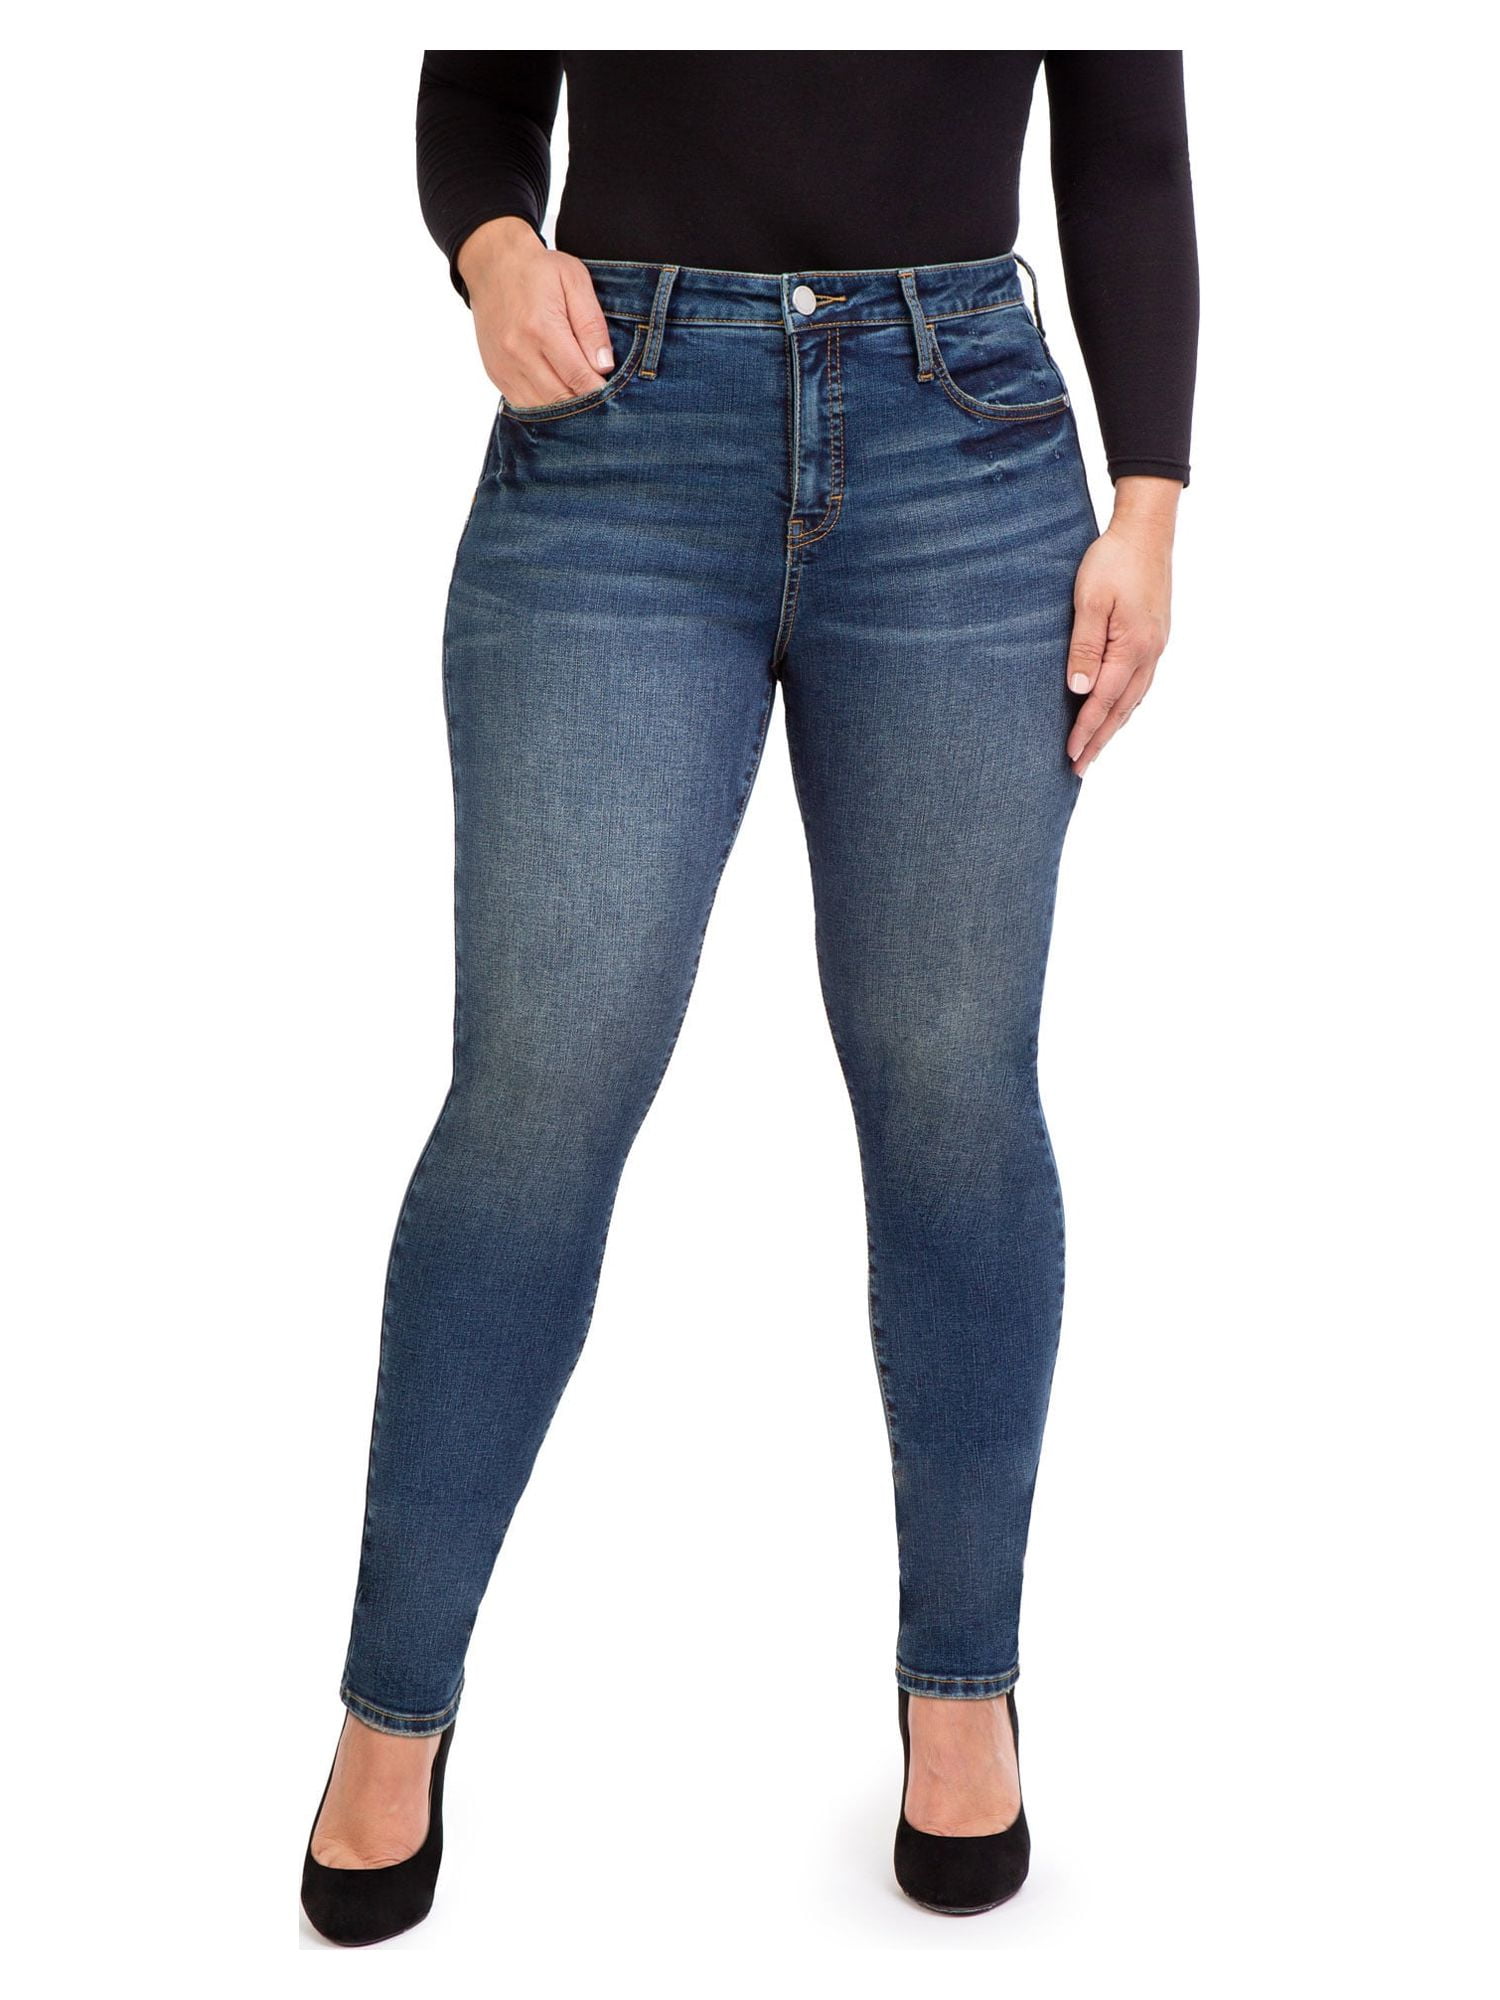 Jordache Women's High Rise Curvy Jeans, Sizes 2-22